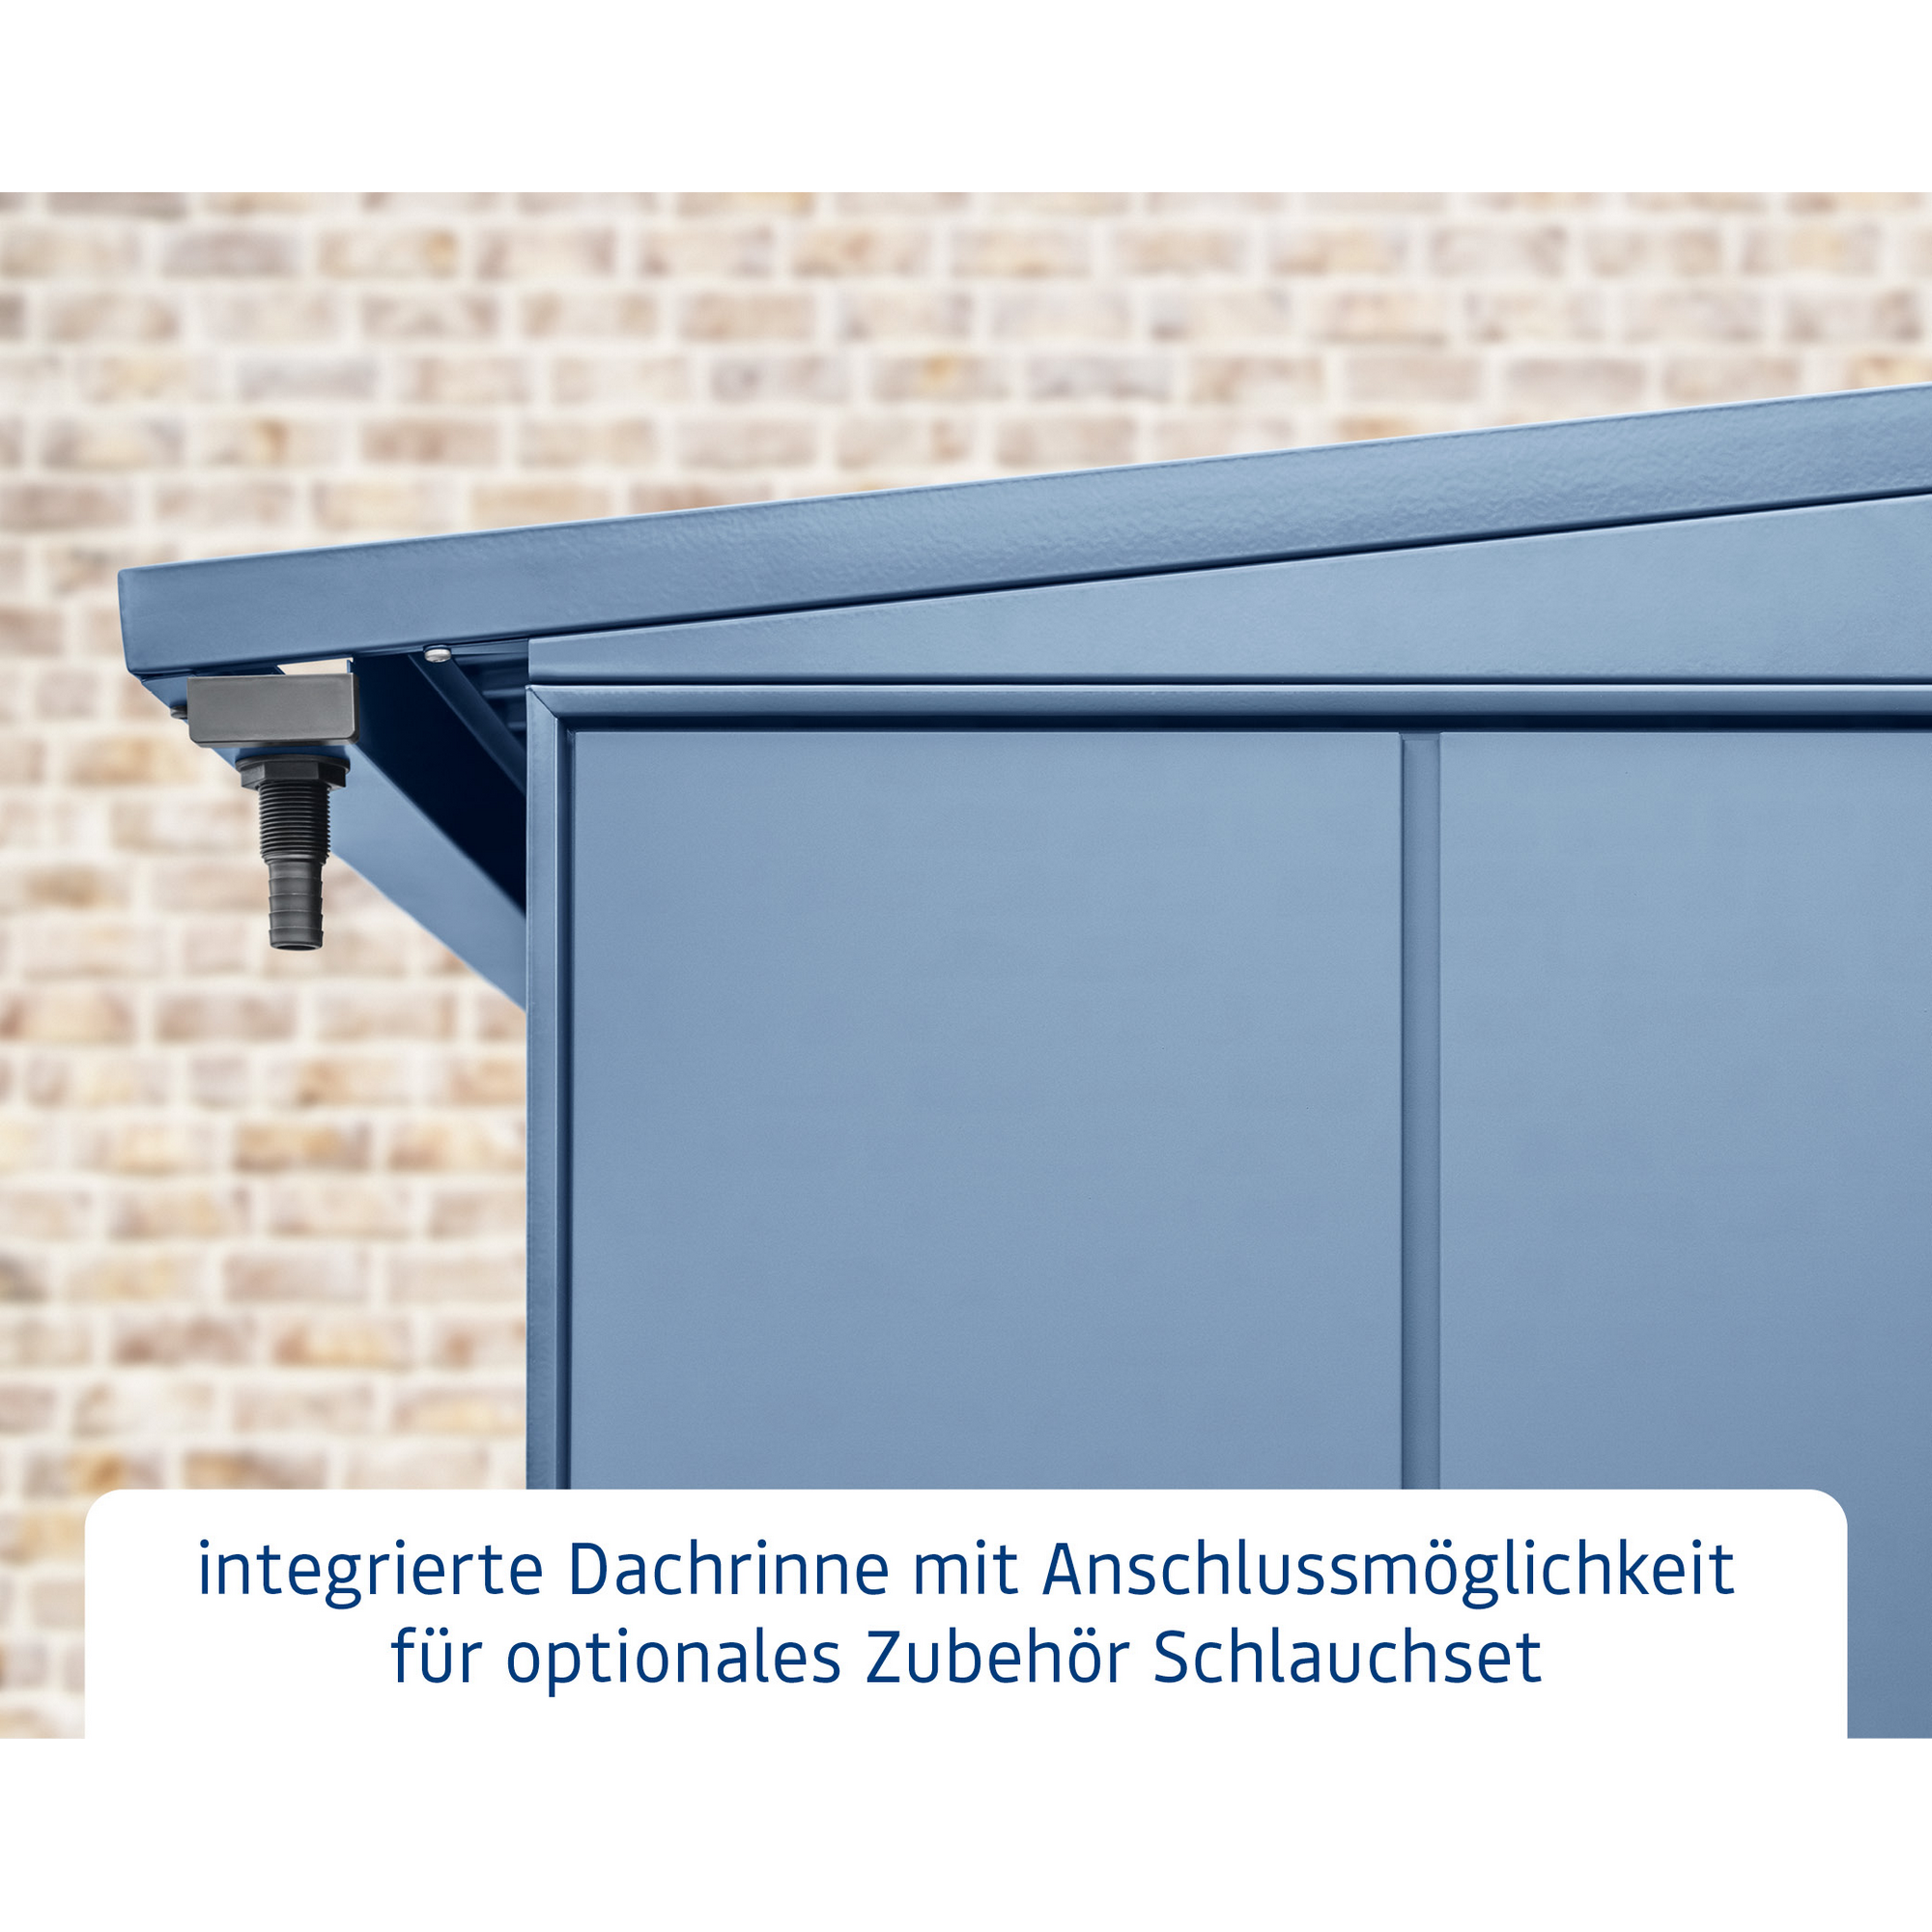 Kaminholzregal 'Elegant Typ 2' taubenblau 102,5 x 181,4 x 198 cm + product picture